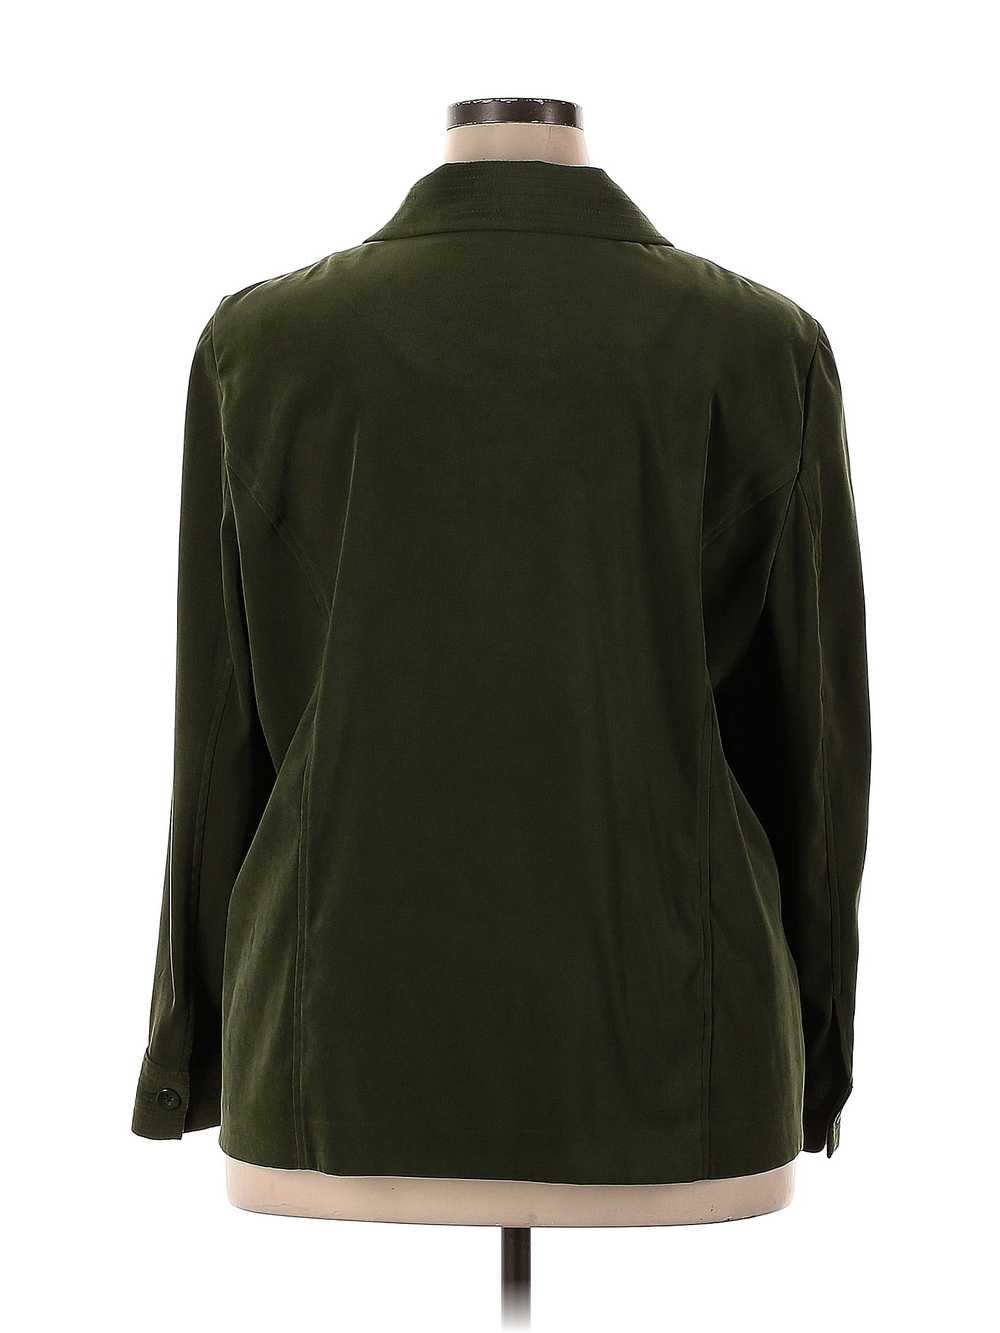 JM Collection Women Green Jacket 20 Plus - image 2